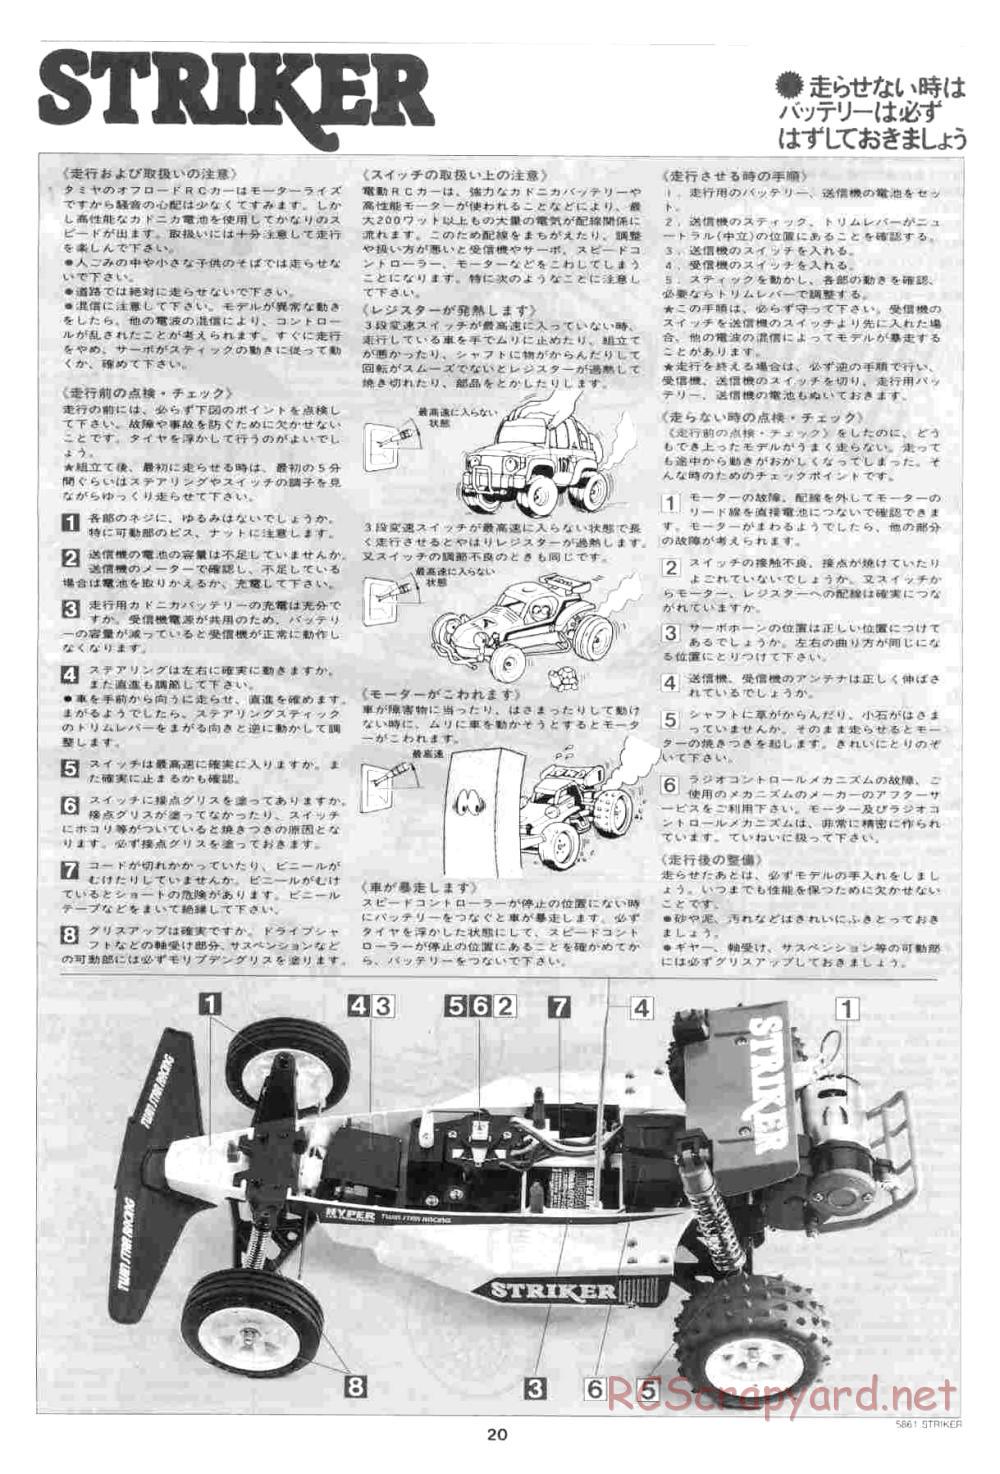 Tamiya - Striker - 58061 - Manual - Page 20